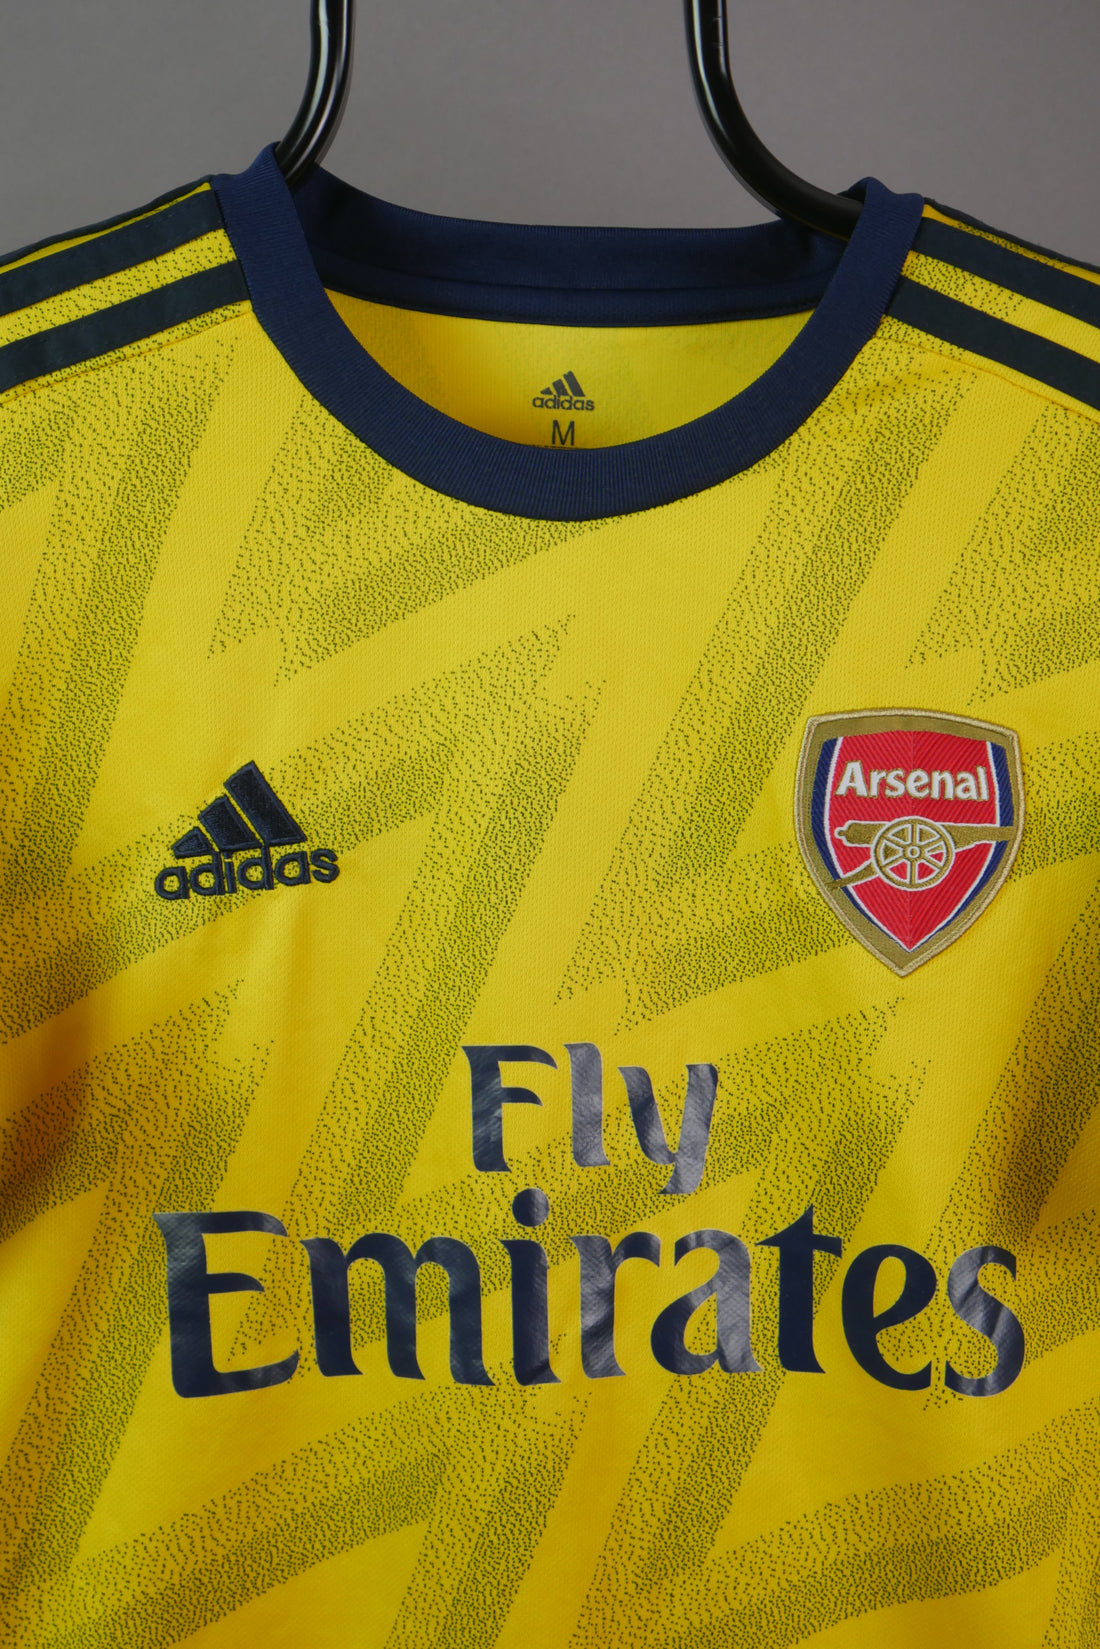 The Adidas Arsenal Aubameyang Football T-Shirt (M)